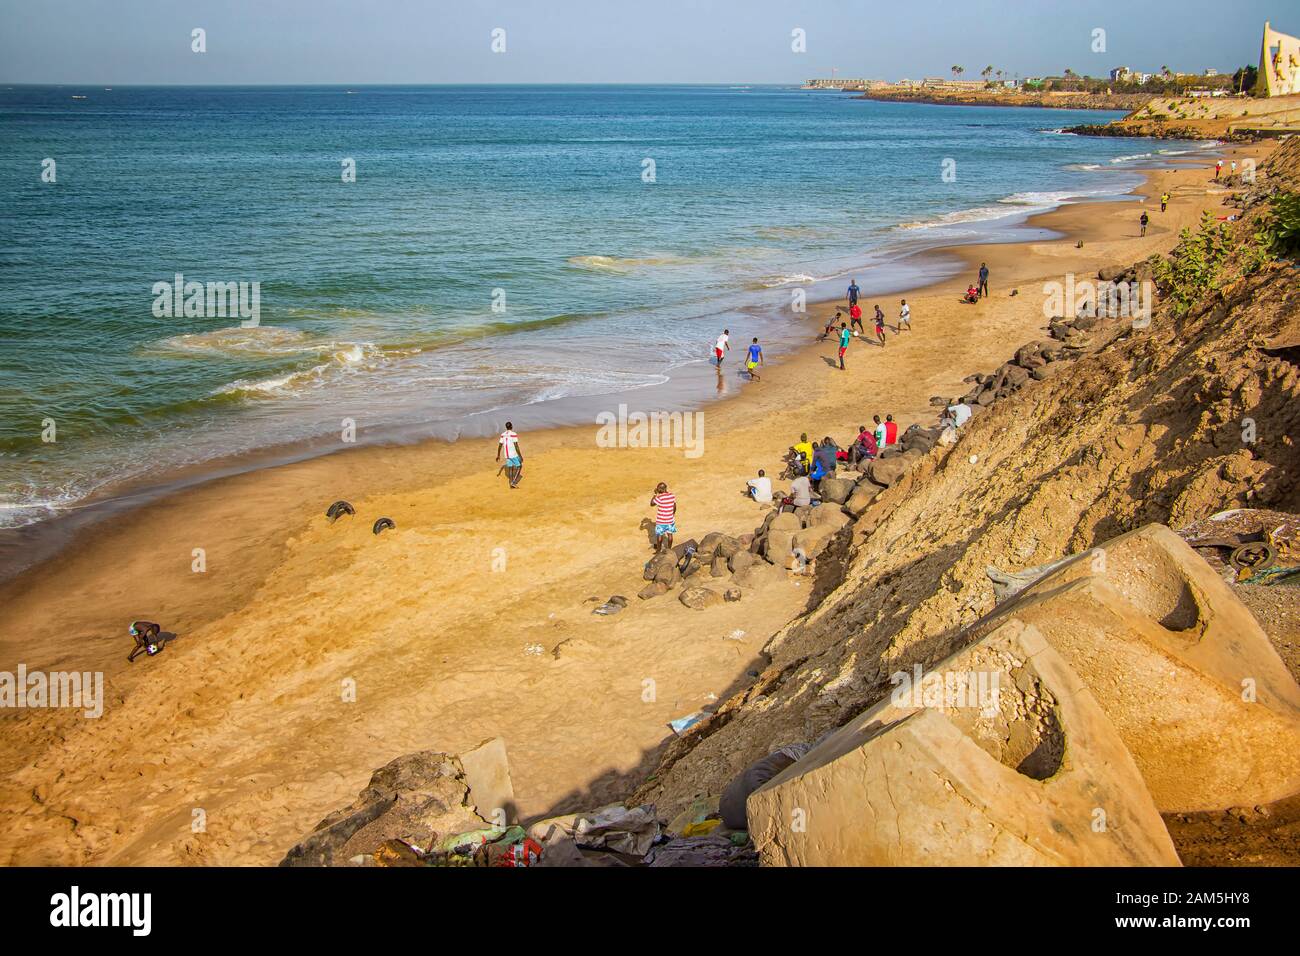 Dakar, Senegal- April 24 2019: Men playing football on the beach near Dakar city in Africa. It is the capital city of Senegal. Stock Photo